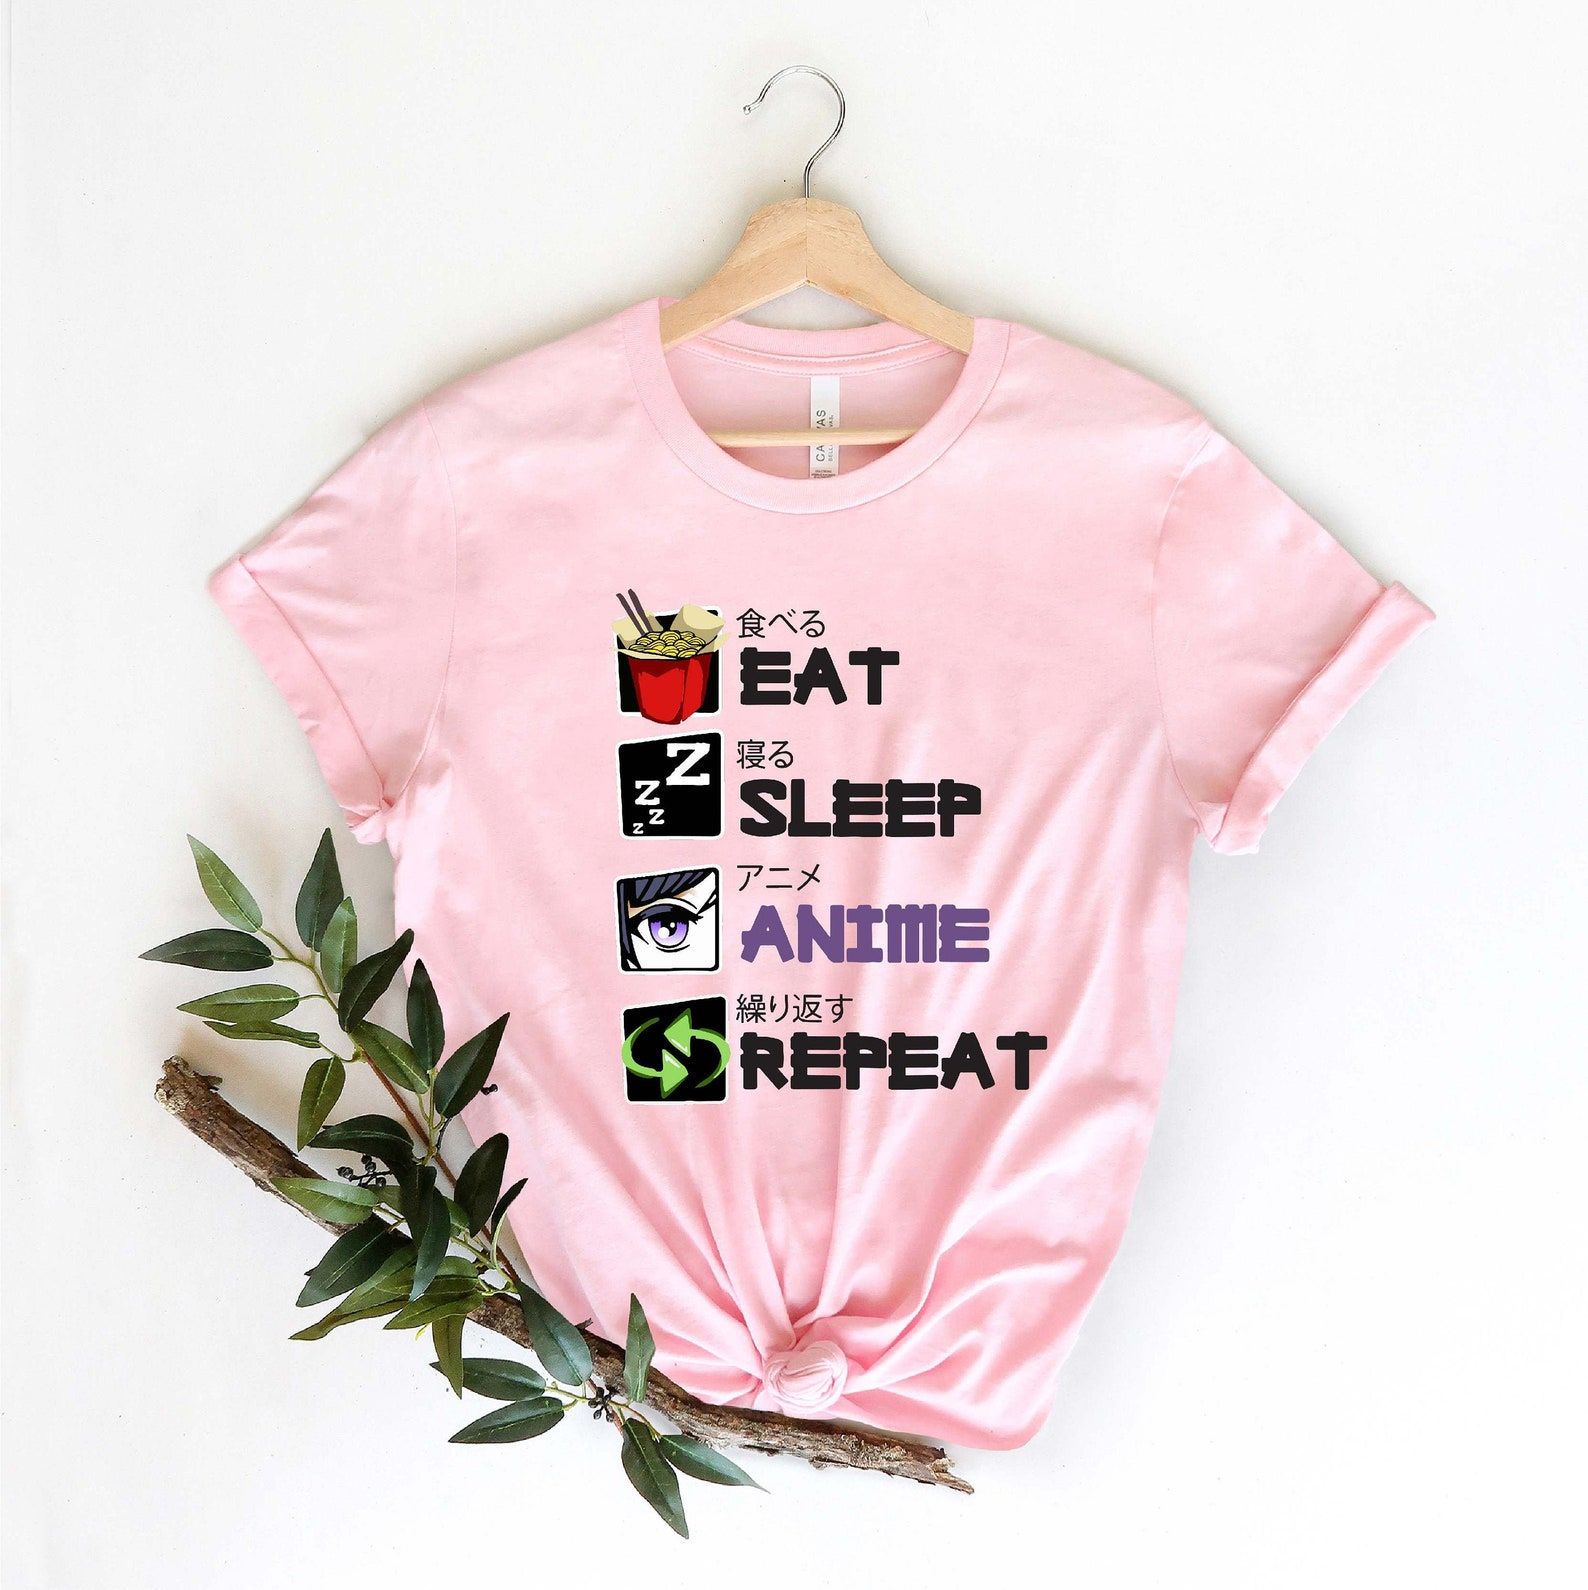 eat sleep anime repeat shirt image